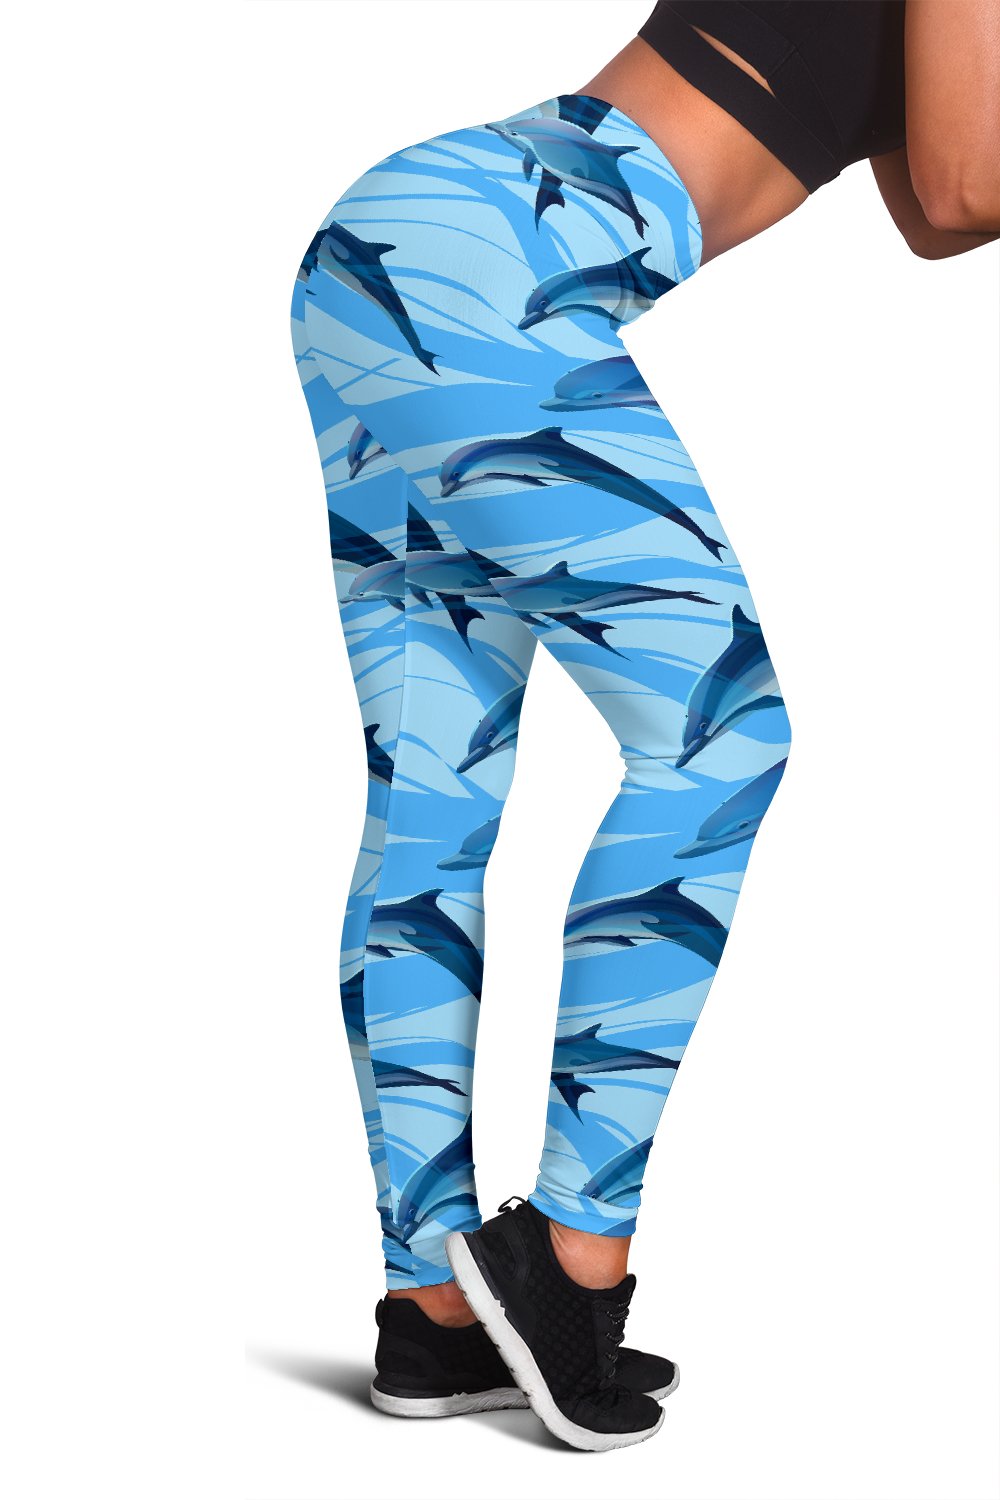 Blue Dolphin Women Leggings